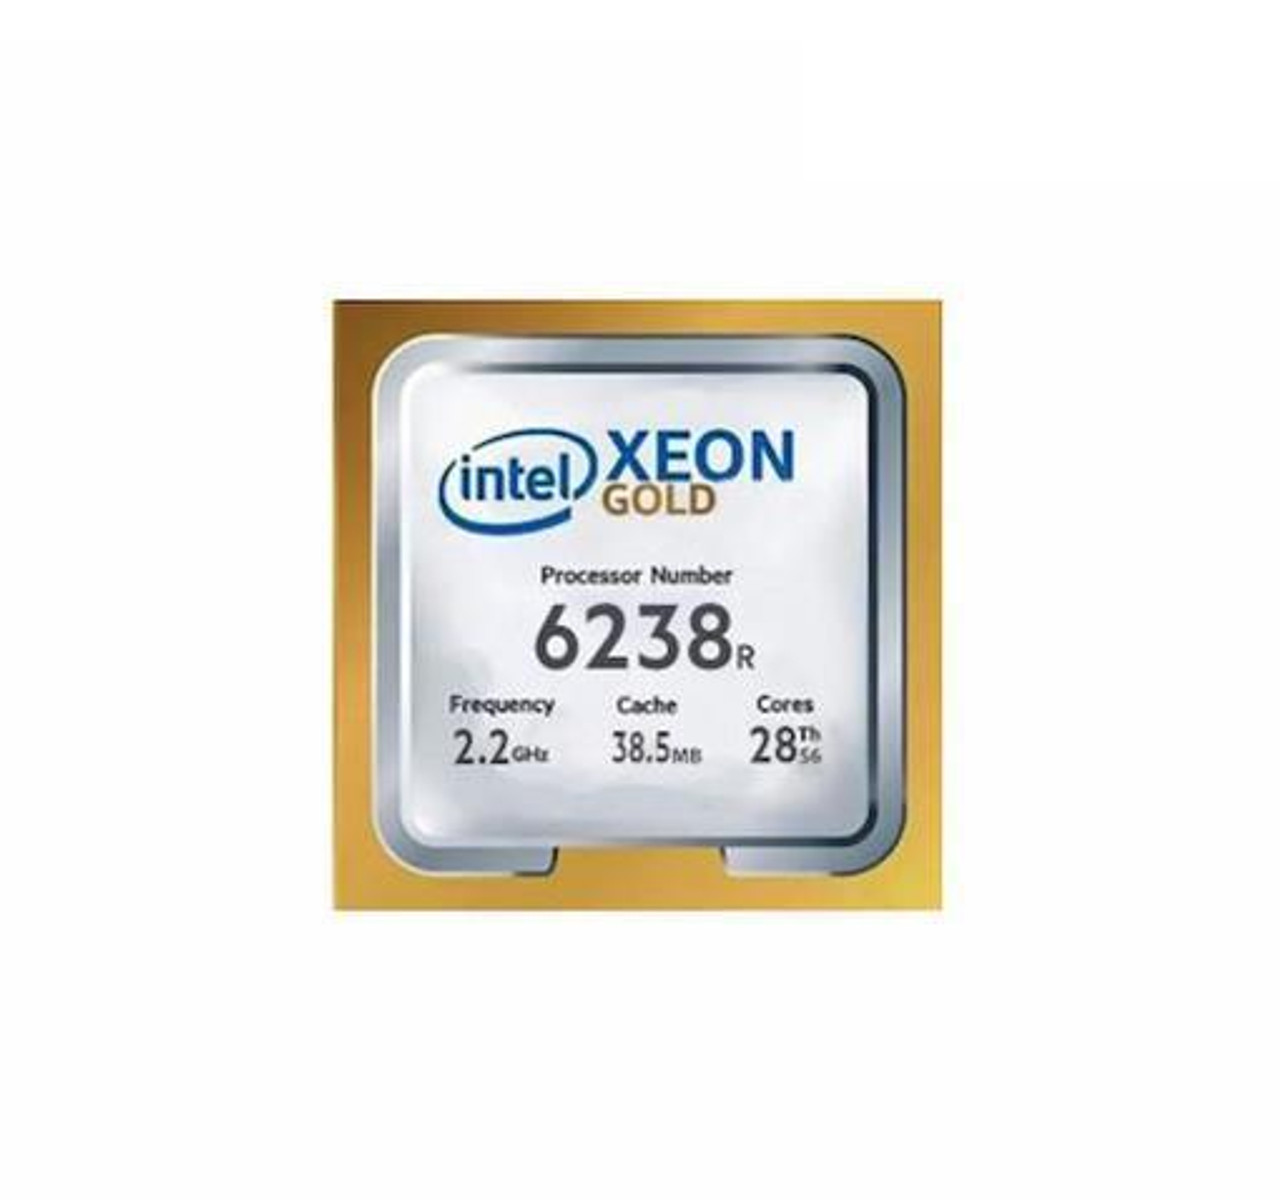 Dell CPU Kit Intel Xeon Gold 28 Core Processor 6238r 2.20GHz 38.5mb Cache Tdp 165w Fclga3647 For Dell Precision 7920 Rack Workstation ( R7920 ) (